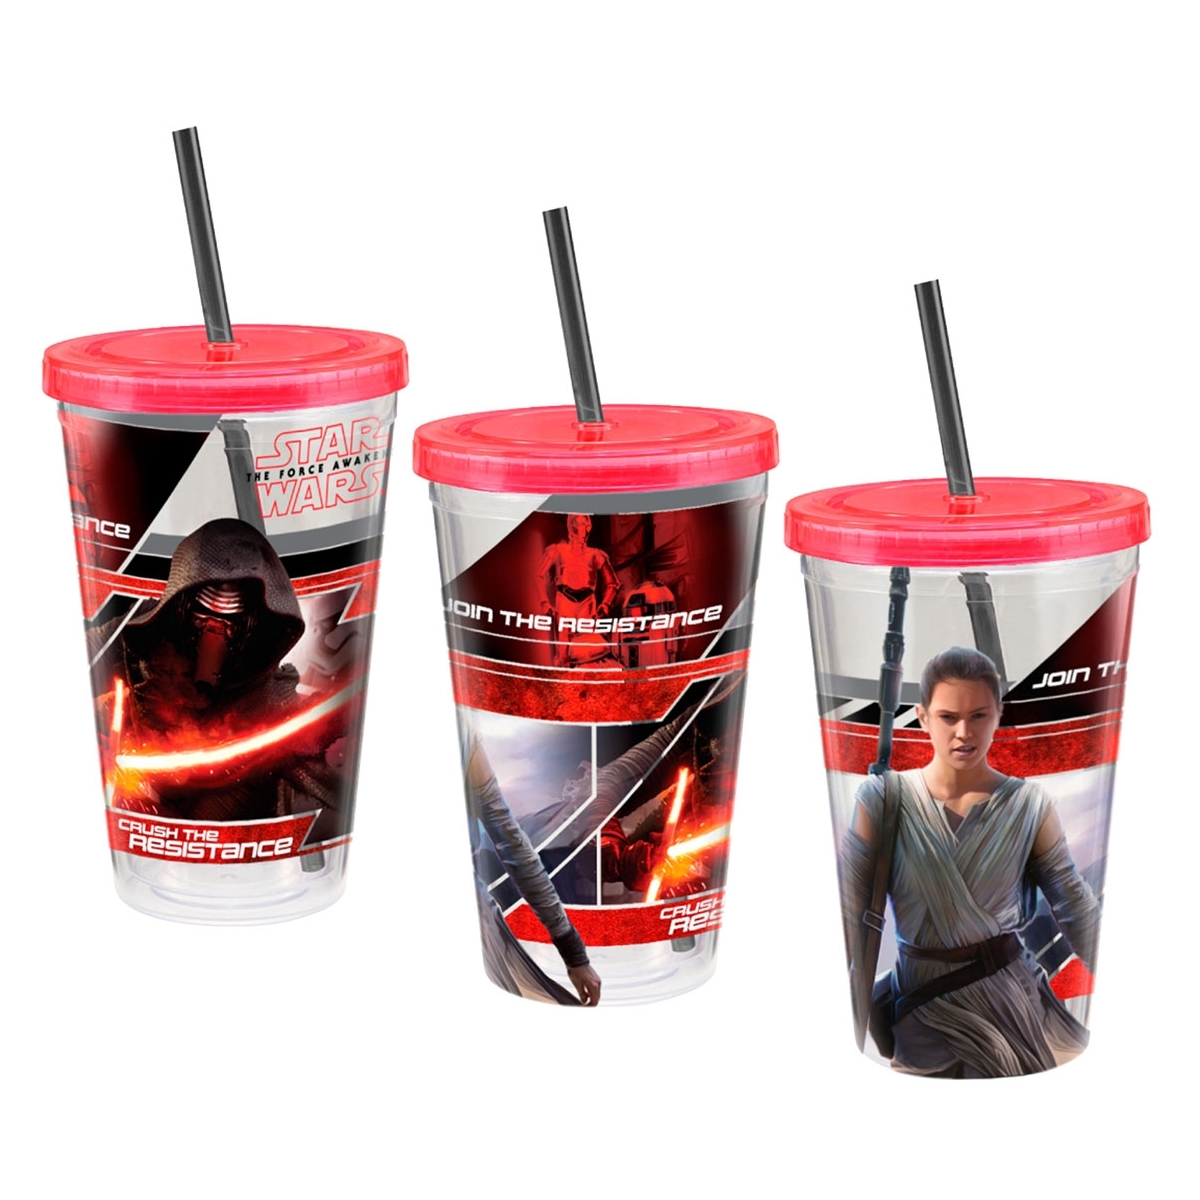 Star Wars Cup. Wars cup